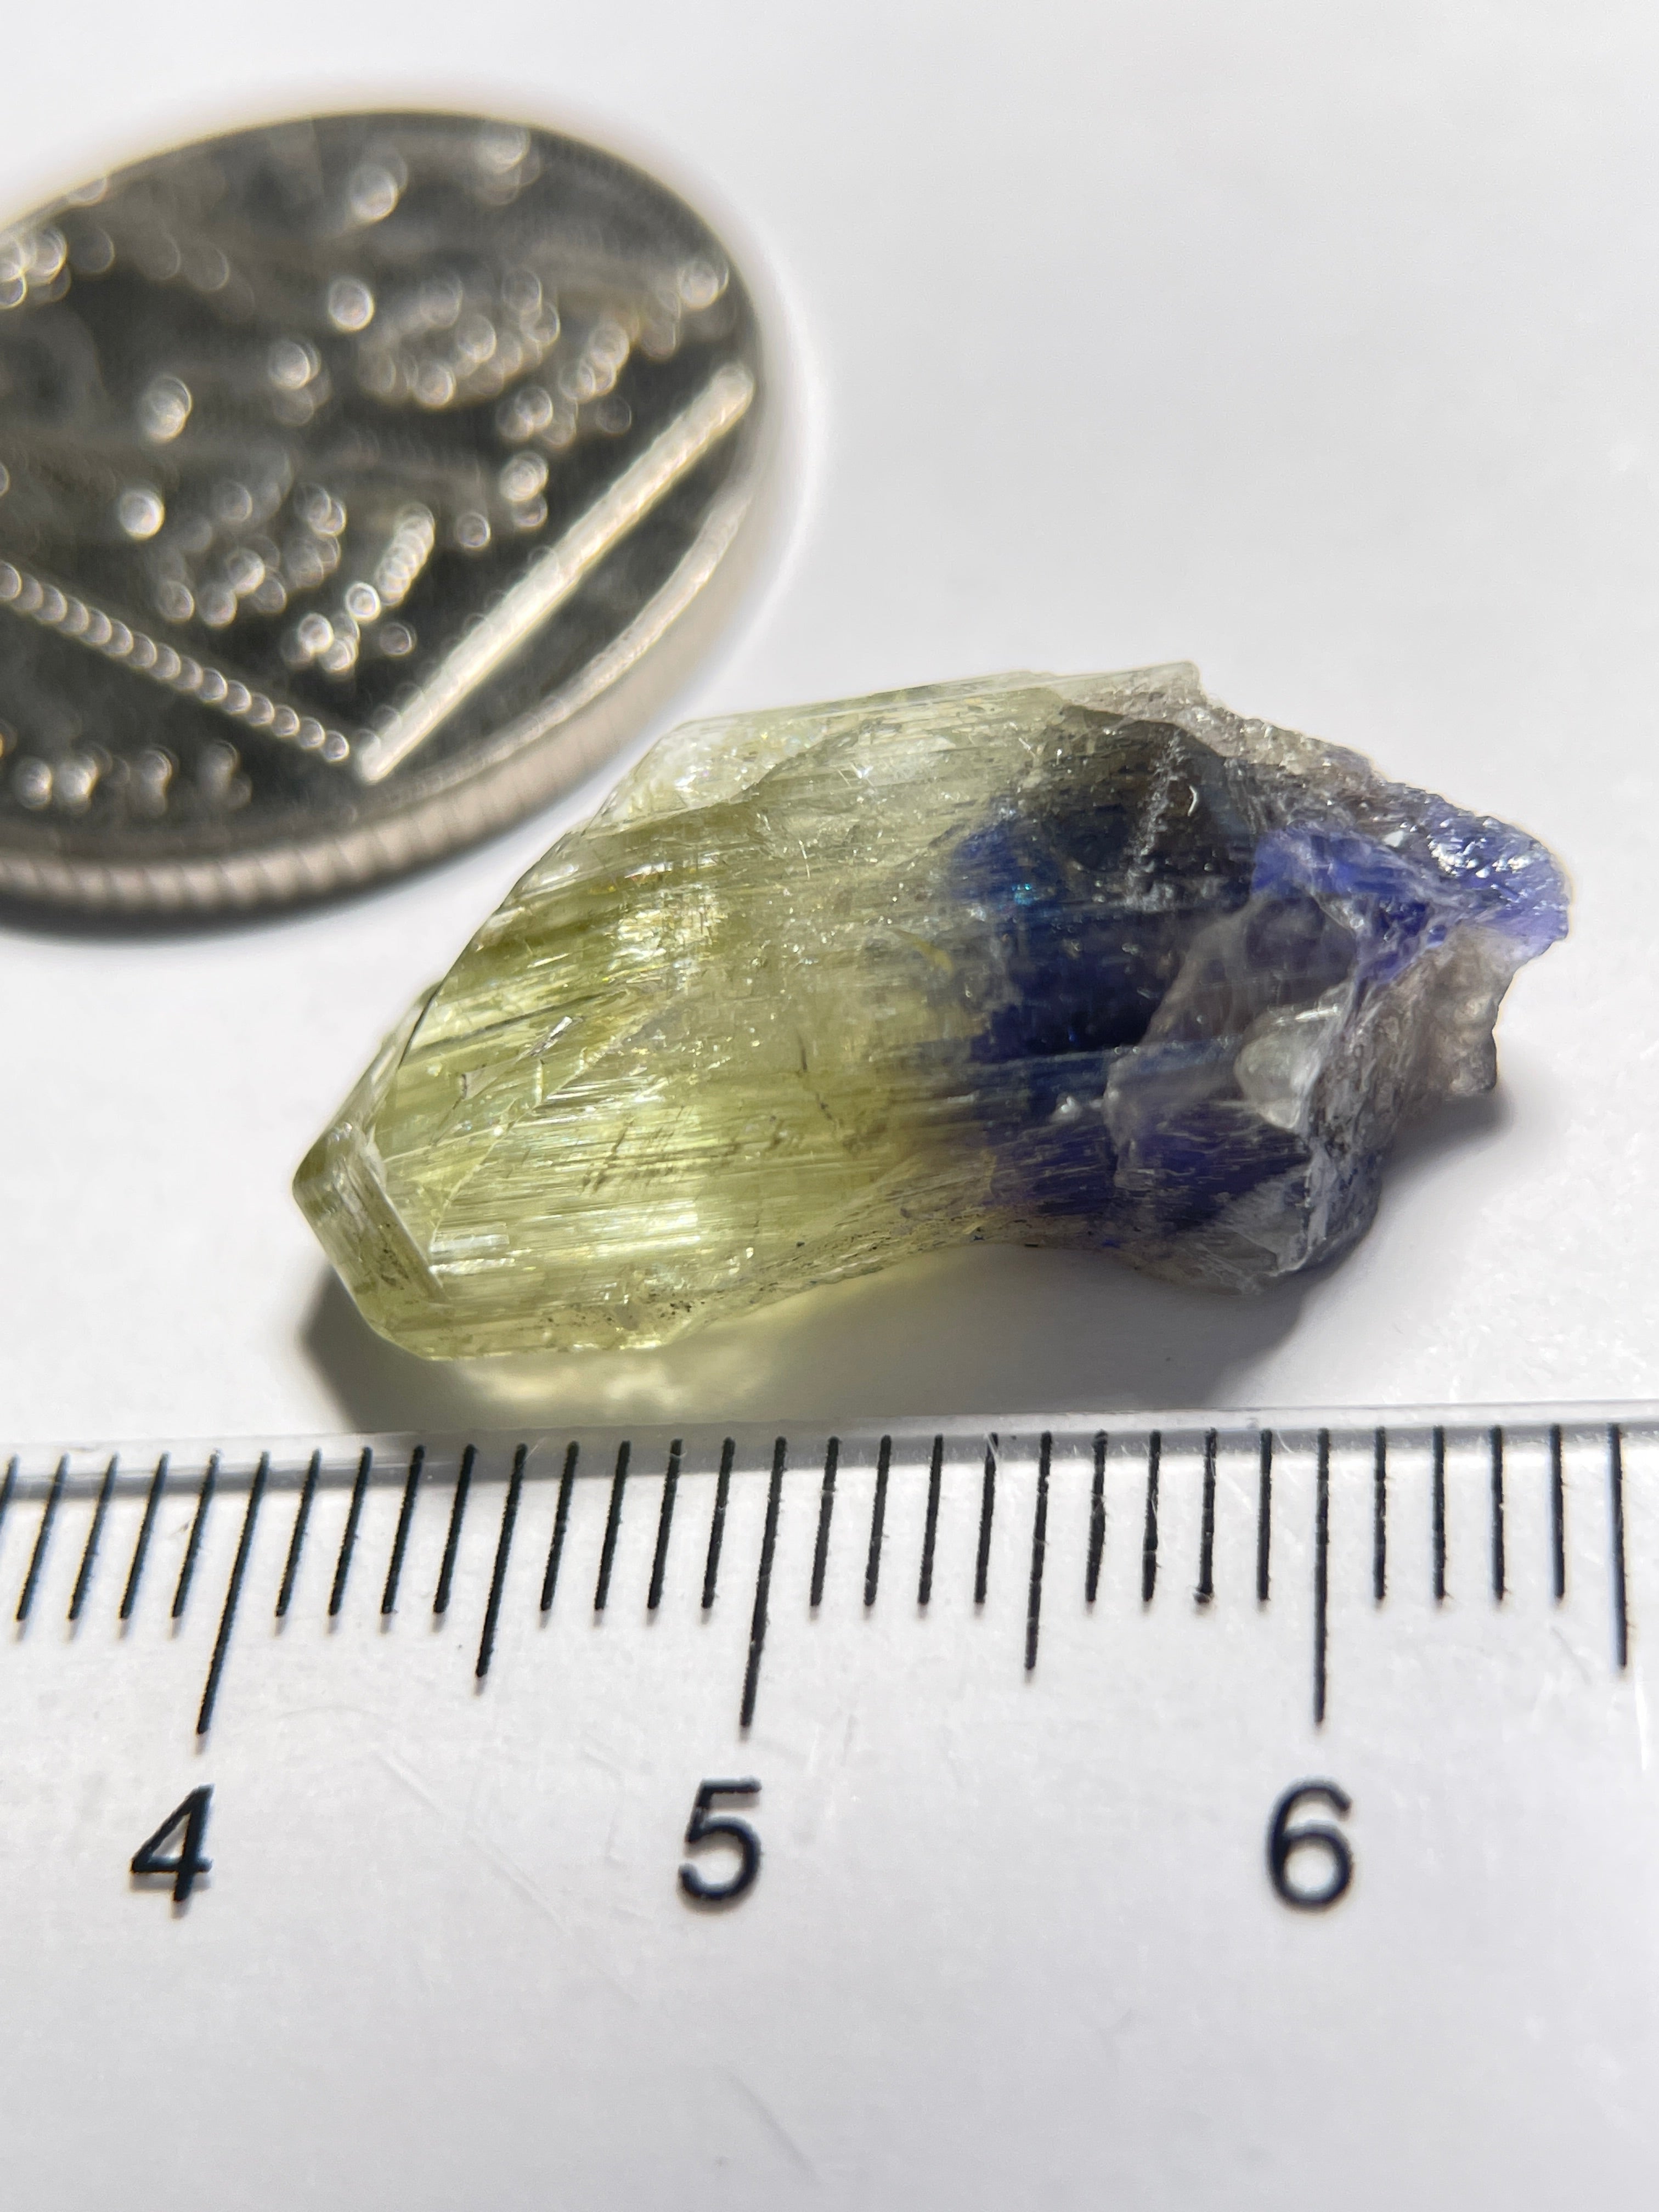 18.29Ct Tanzanite Crystal Unheated Tanzania